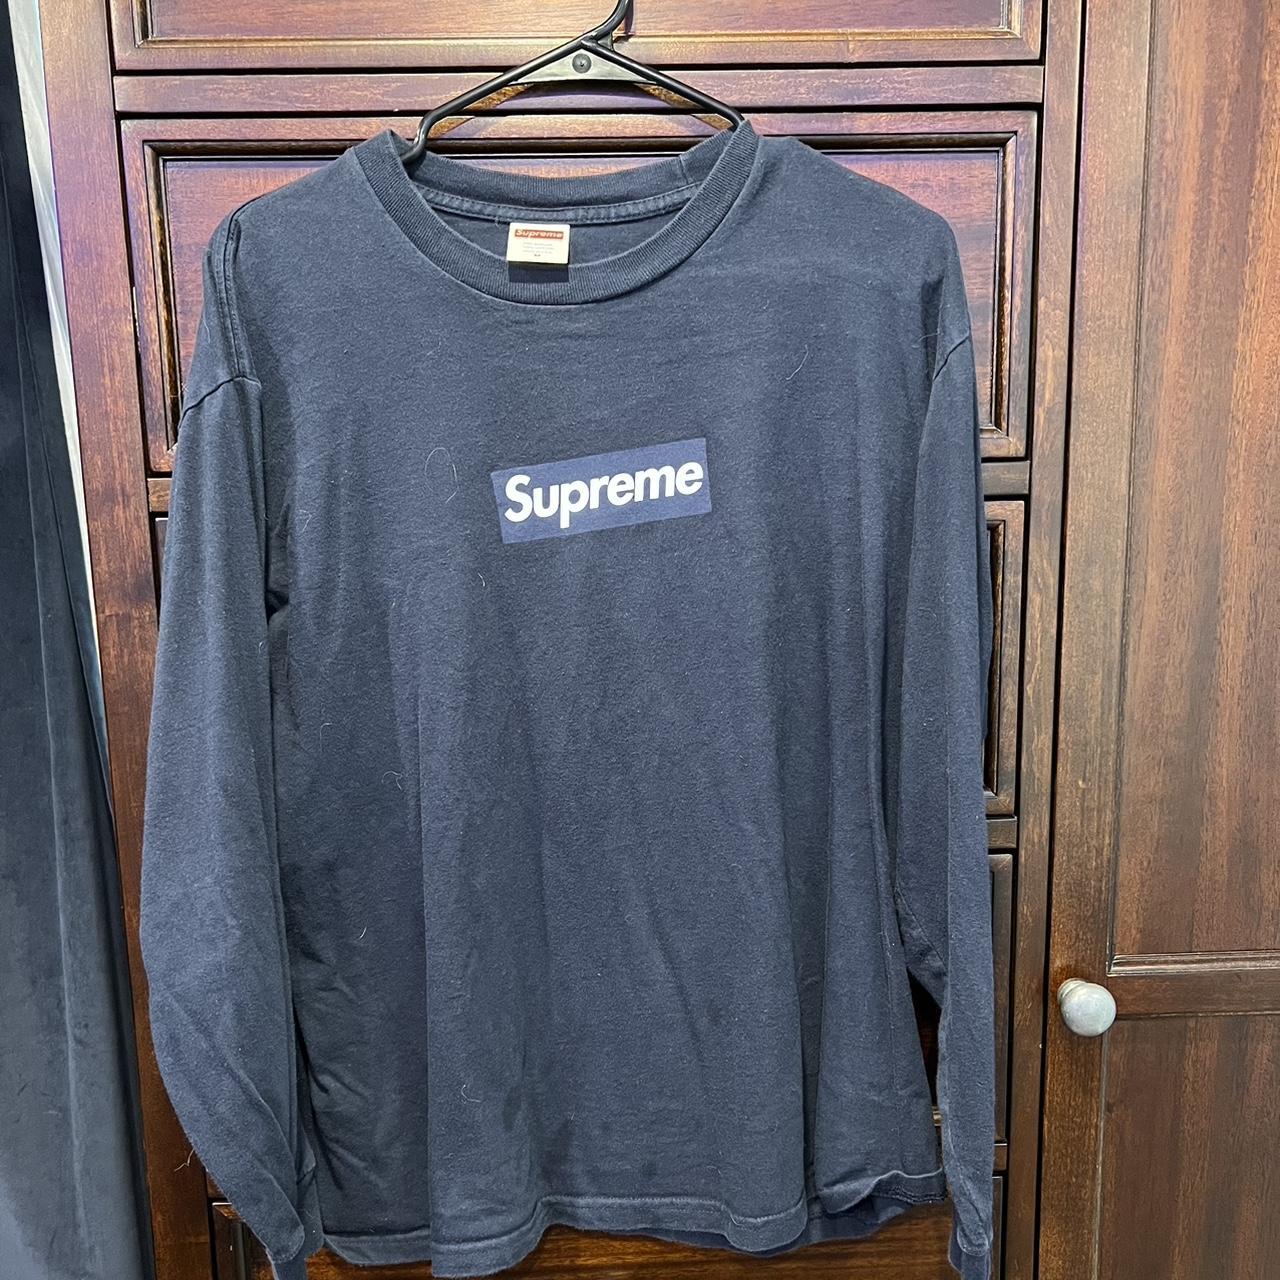 Supreme Men's Box-Logo Long-Sleeve T-Shirt